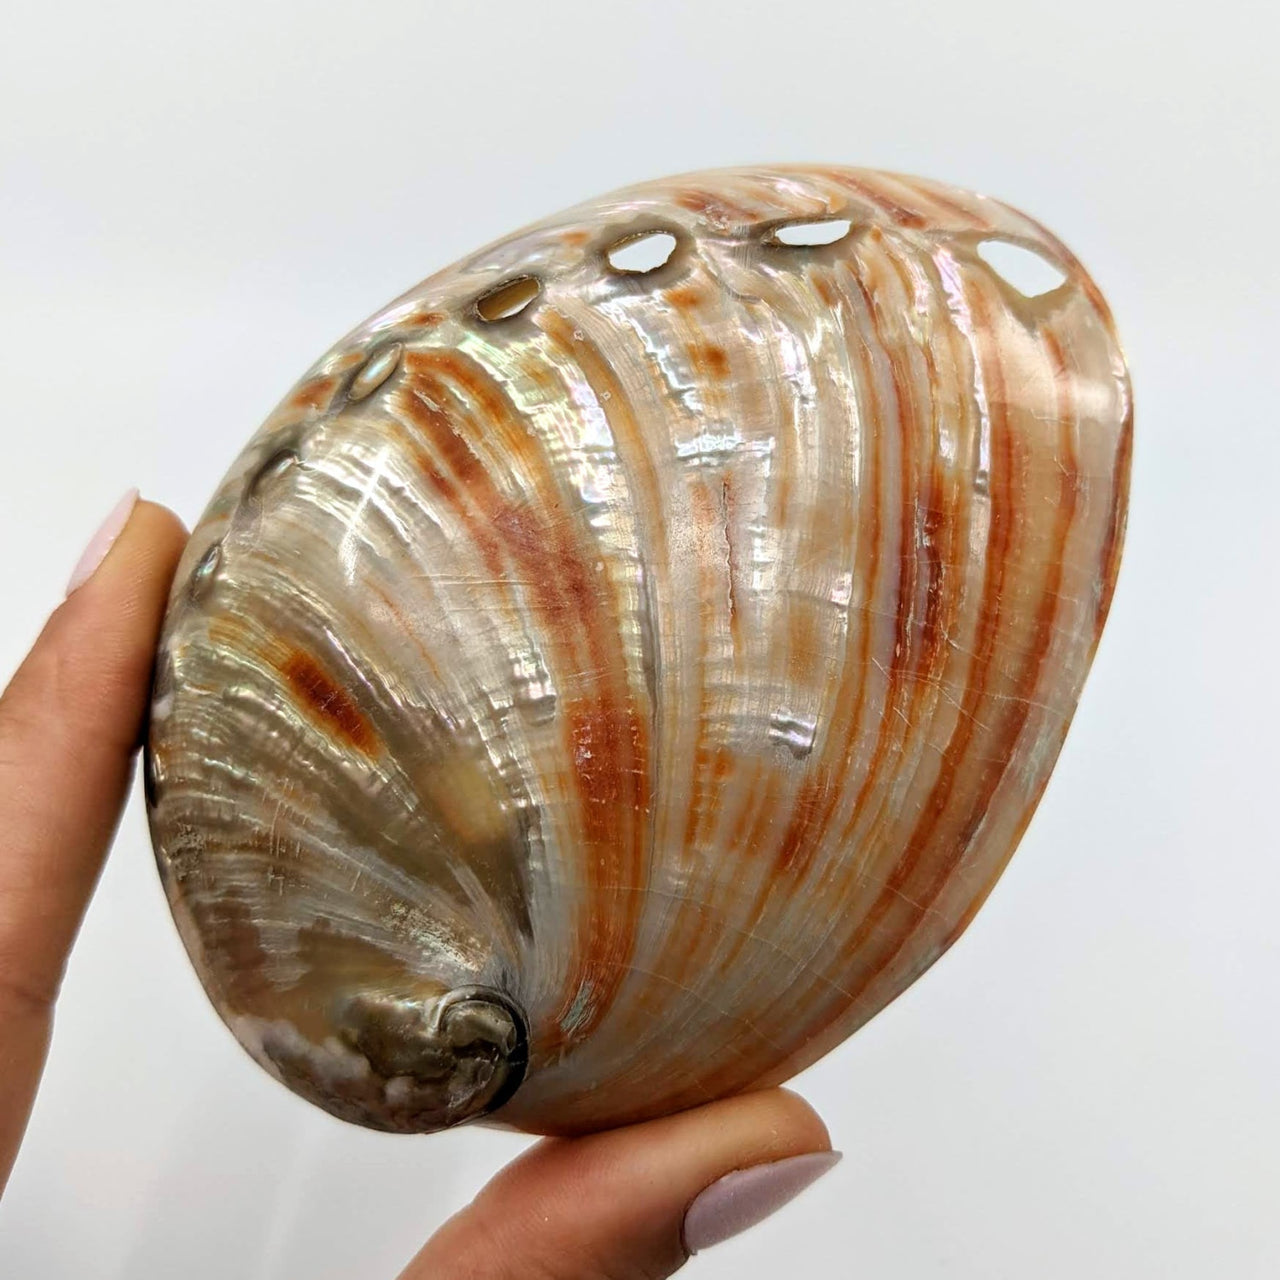 1 Abalone Shell 4 Polished (54g) #SK7935 - $19